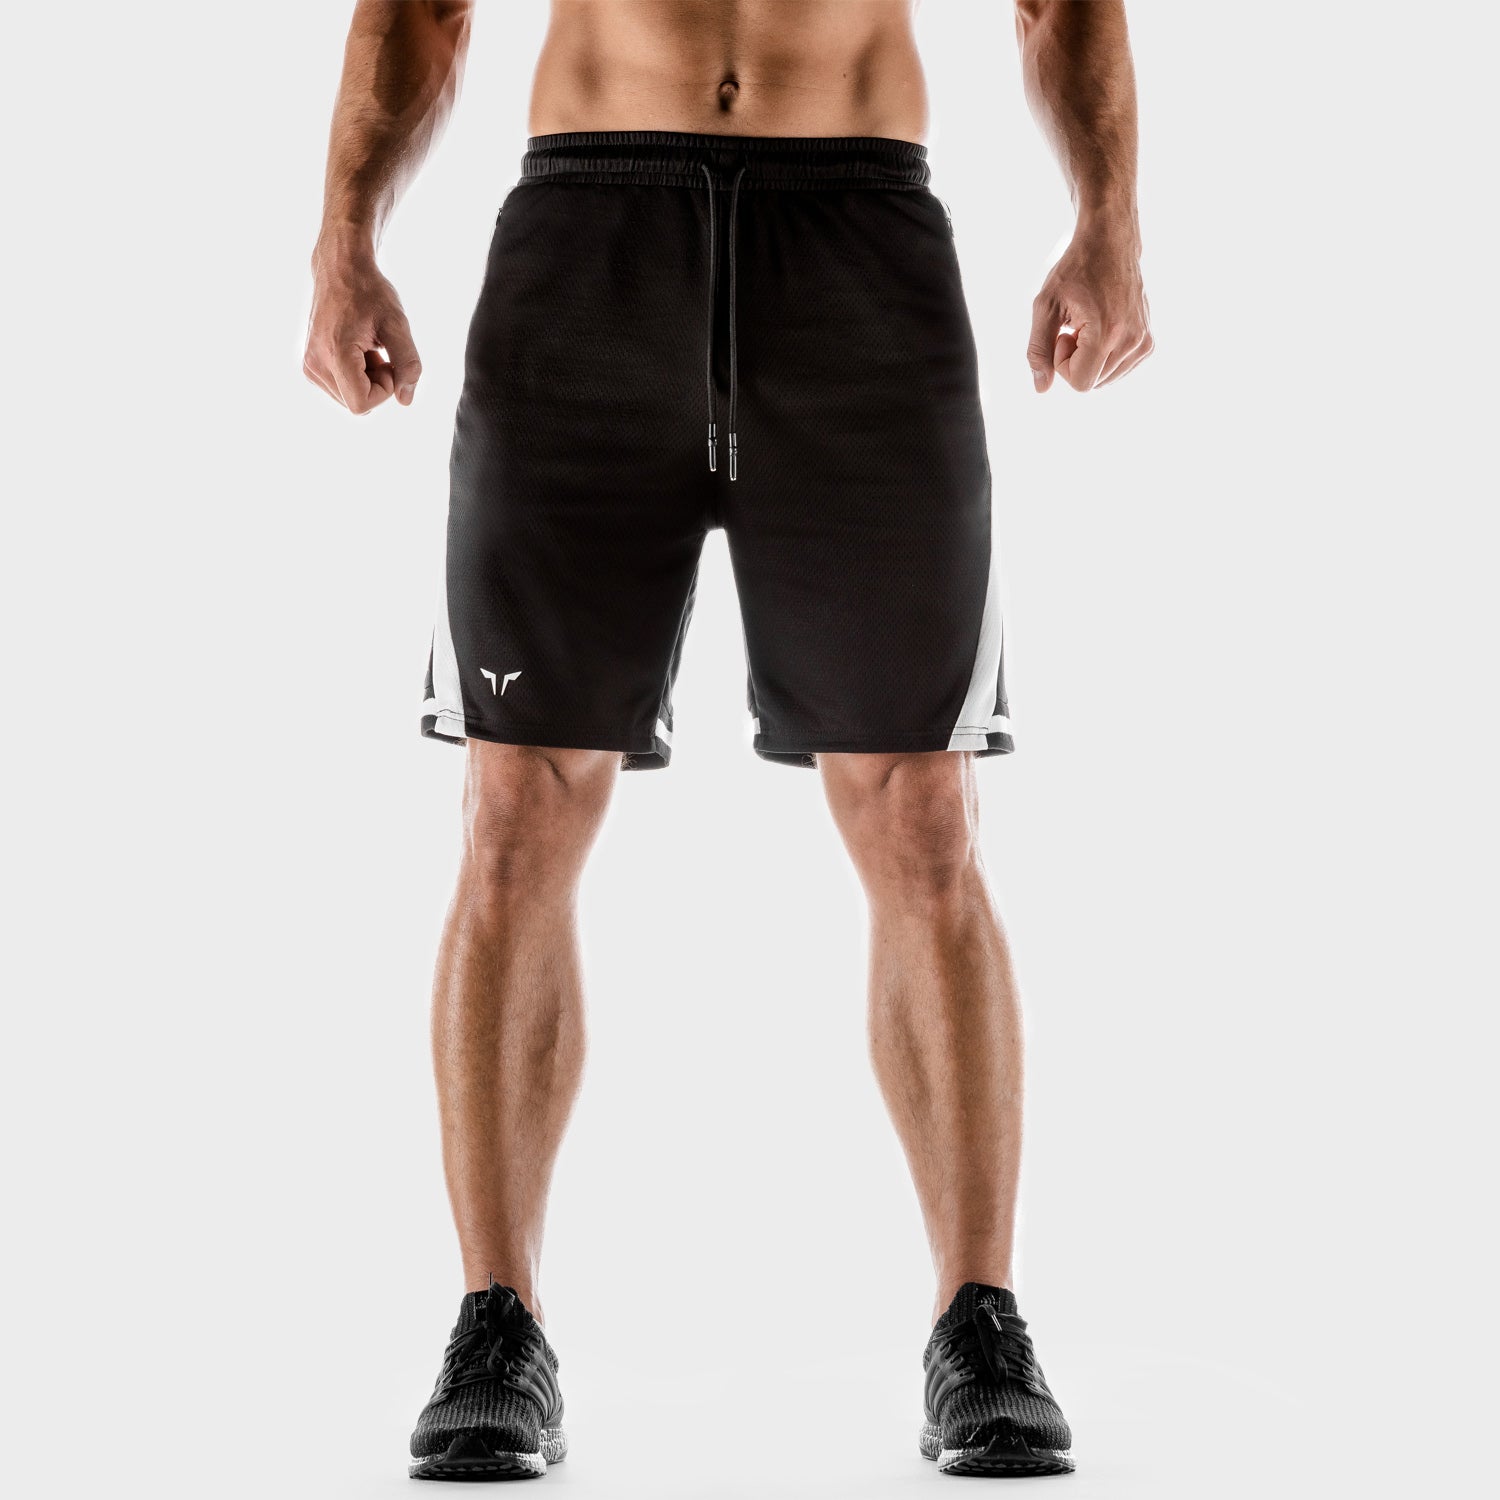 squatwolf-workout-short-for-men-hybrid-2-0-basketball-shorts-black-gym-wear